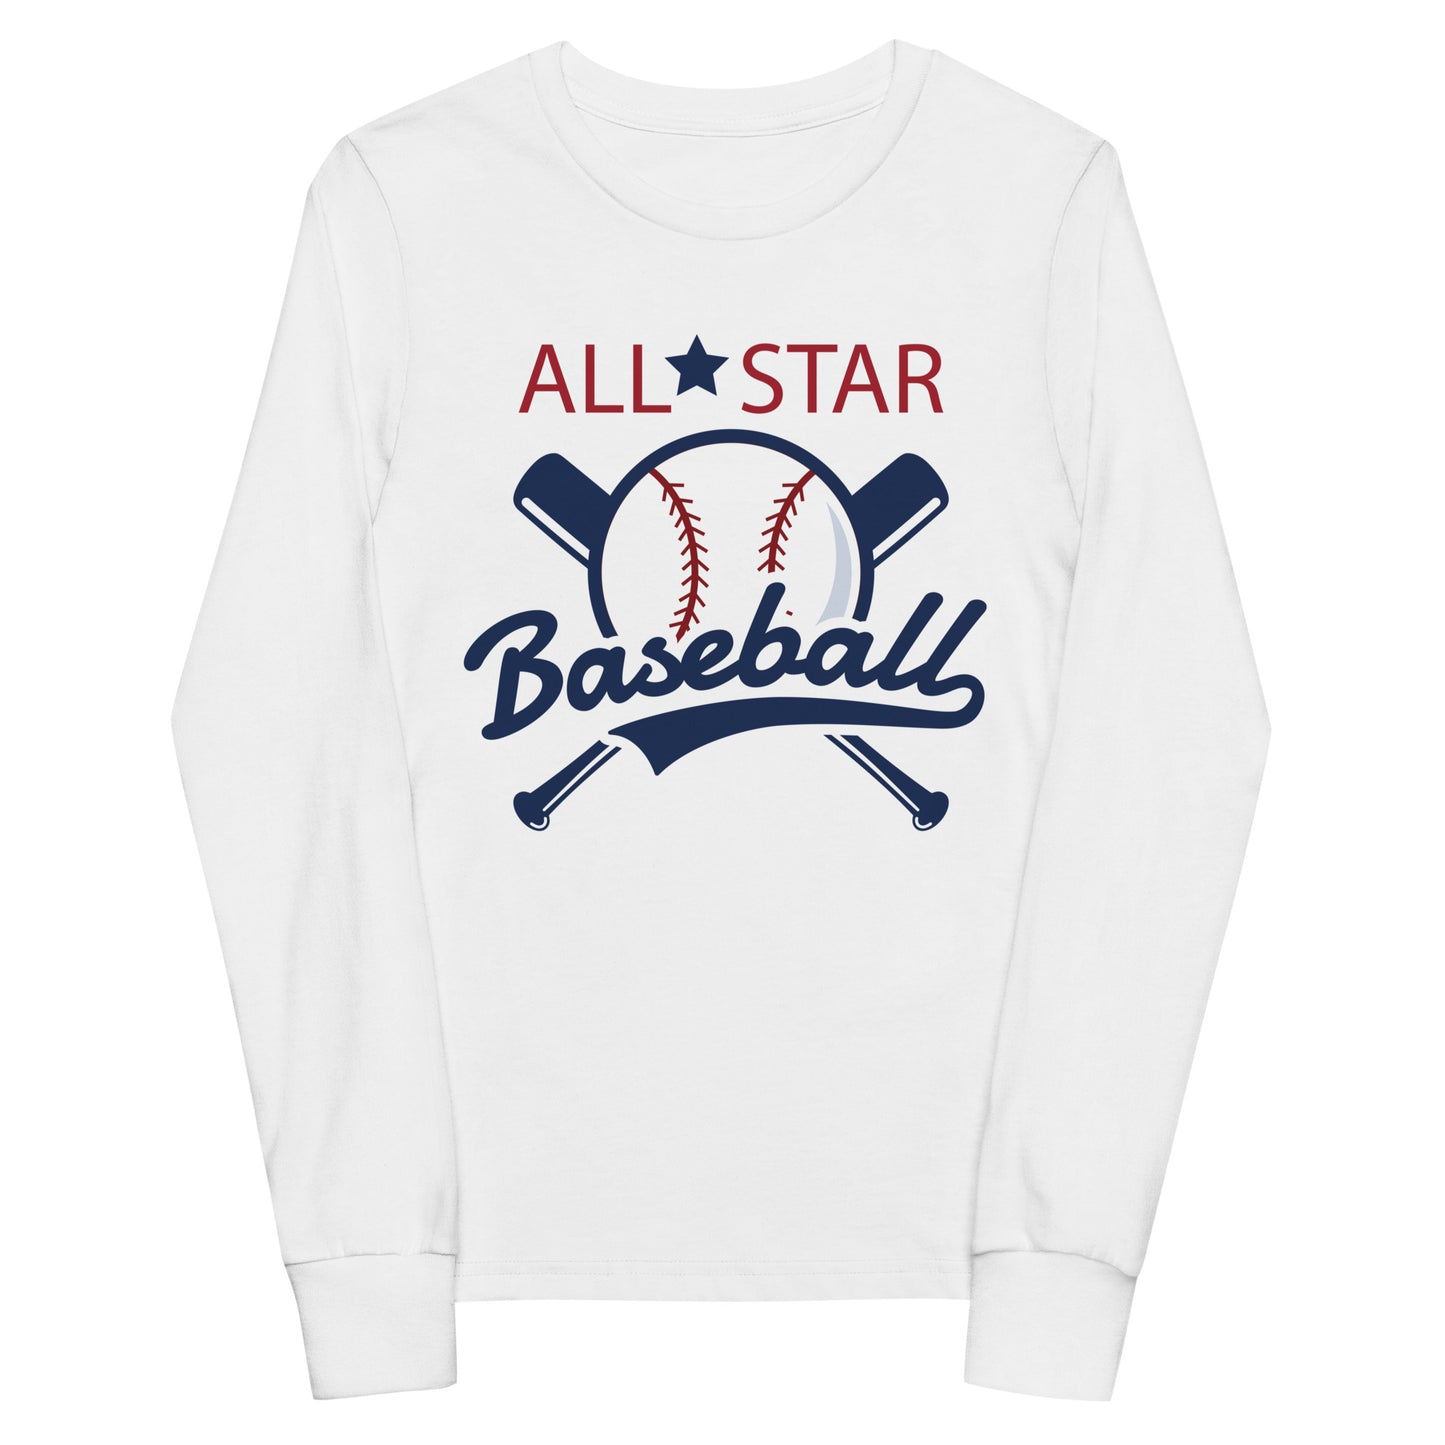 All Star Baseball - Sustainably Made Kids Long Sleeve T-shirt